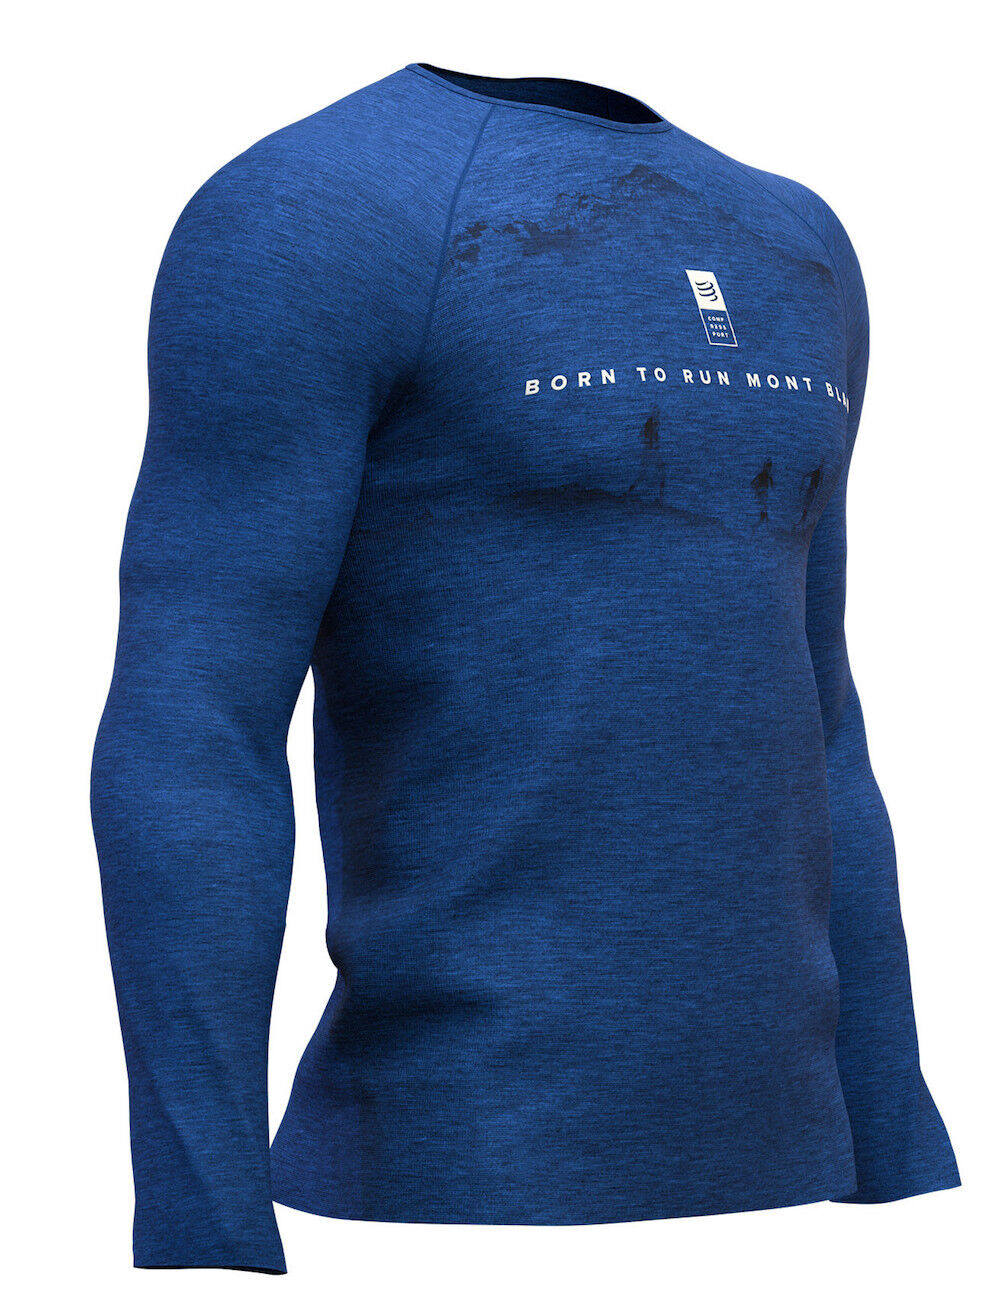 Compressport Training Tshirt LS - Mont Blanc 2019 - Base layer - Men's